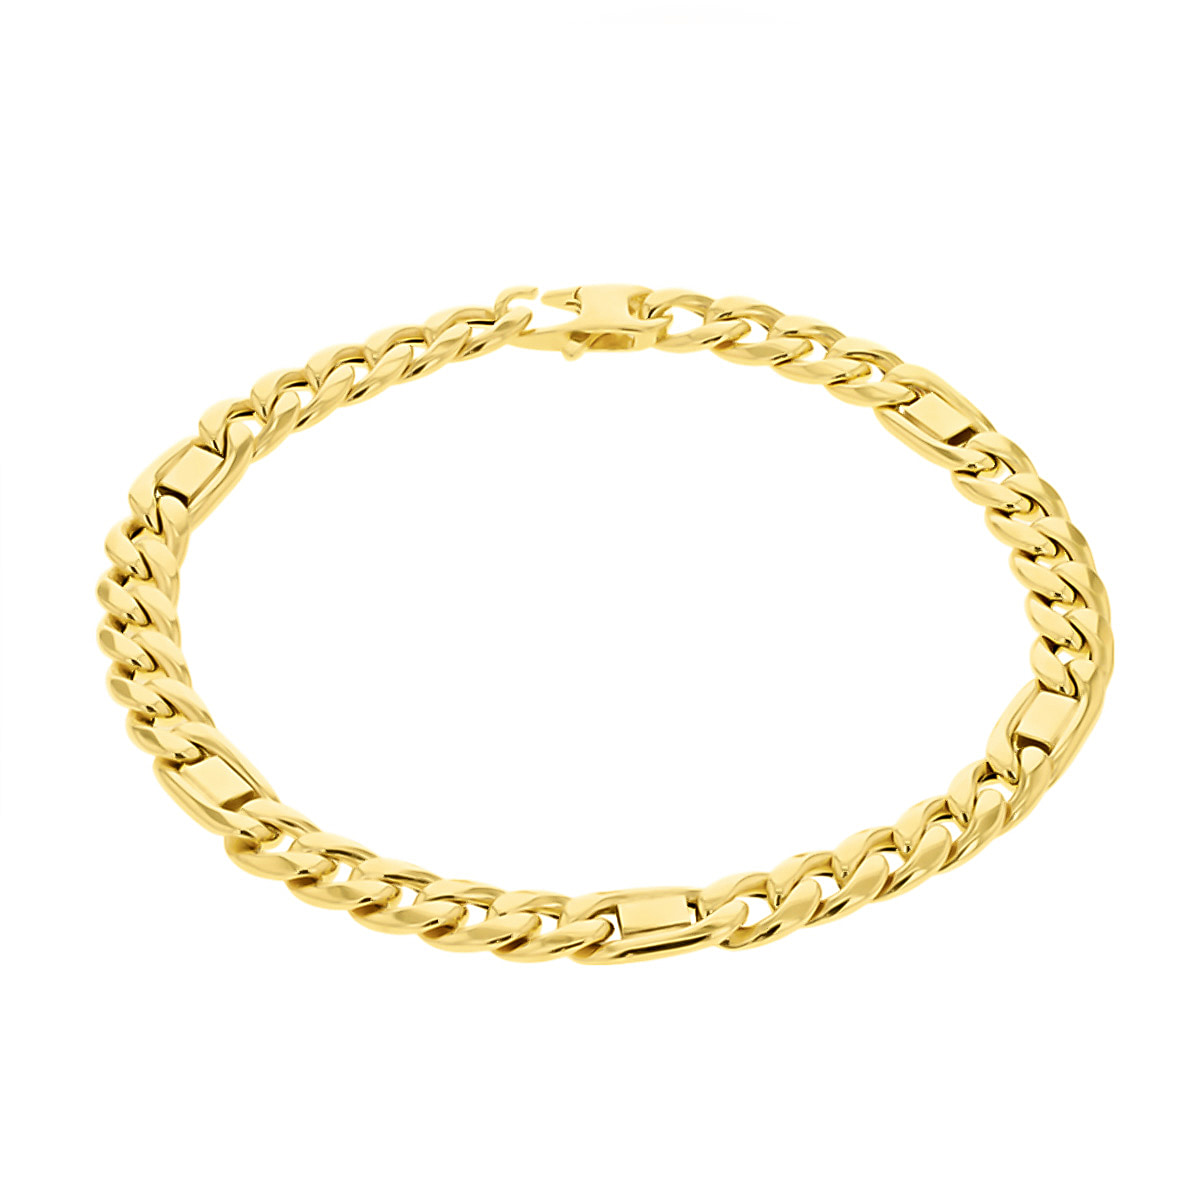 Dubai Closeout - 9K Yellow Gold Cuban Link Bracelet (Size - 8.25), Gold Wt. 9.01 Gms